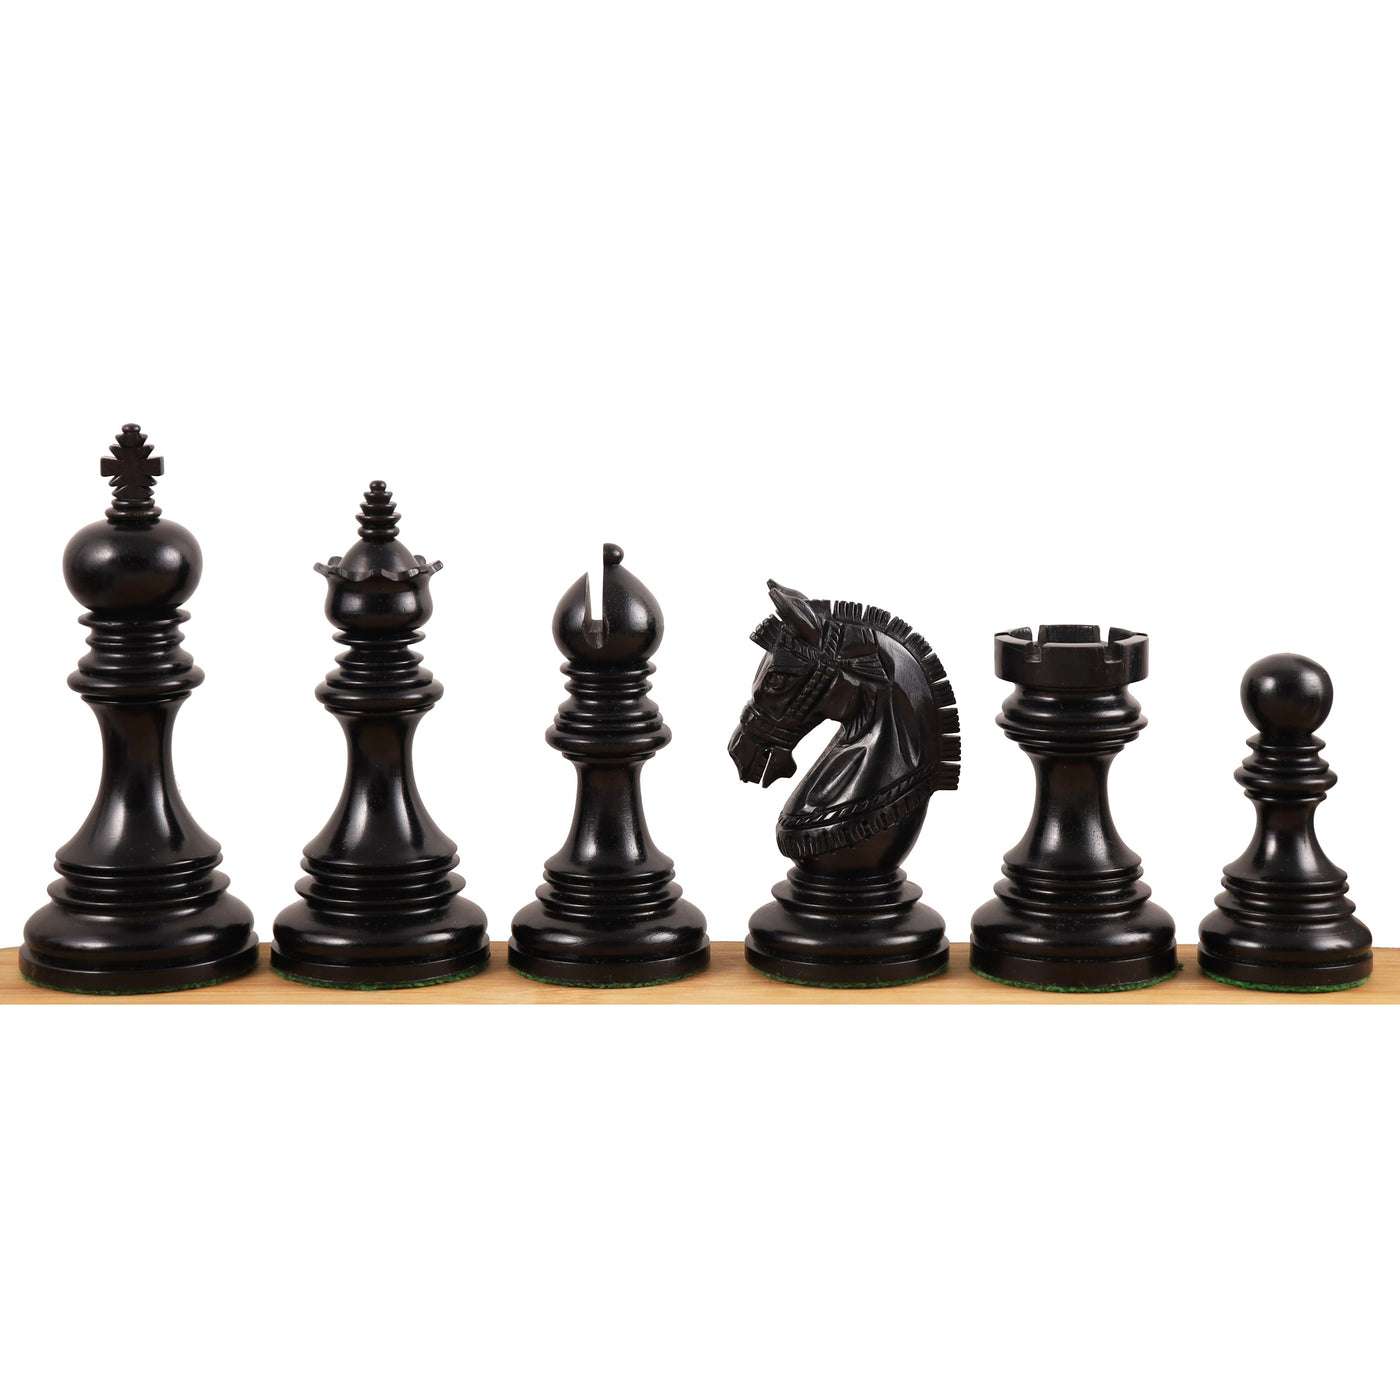 Combo of 4.1" Stallion Staunton Luxury Chess Set - Pieces in Ebony Wood with 23" Large Ebony & Maple Wood Chessboard and Storage Box